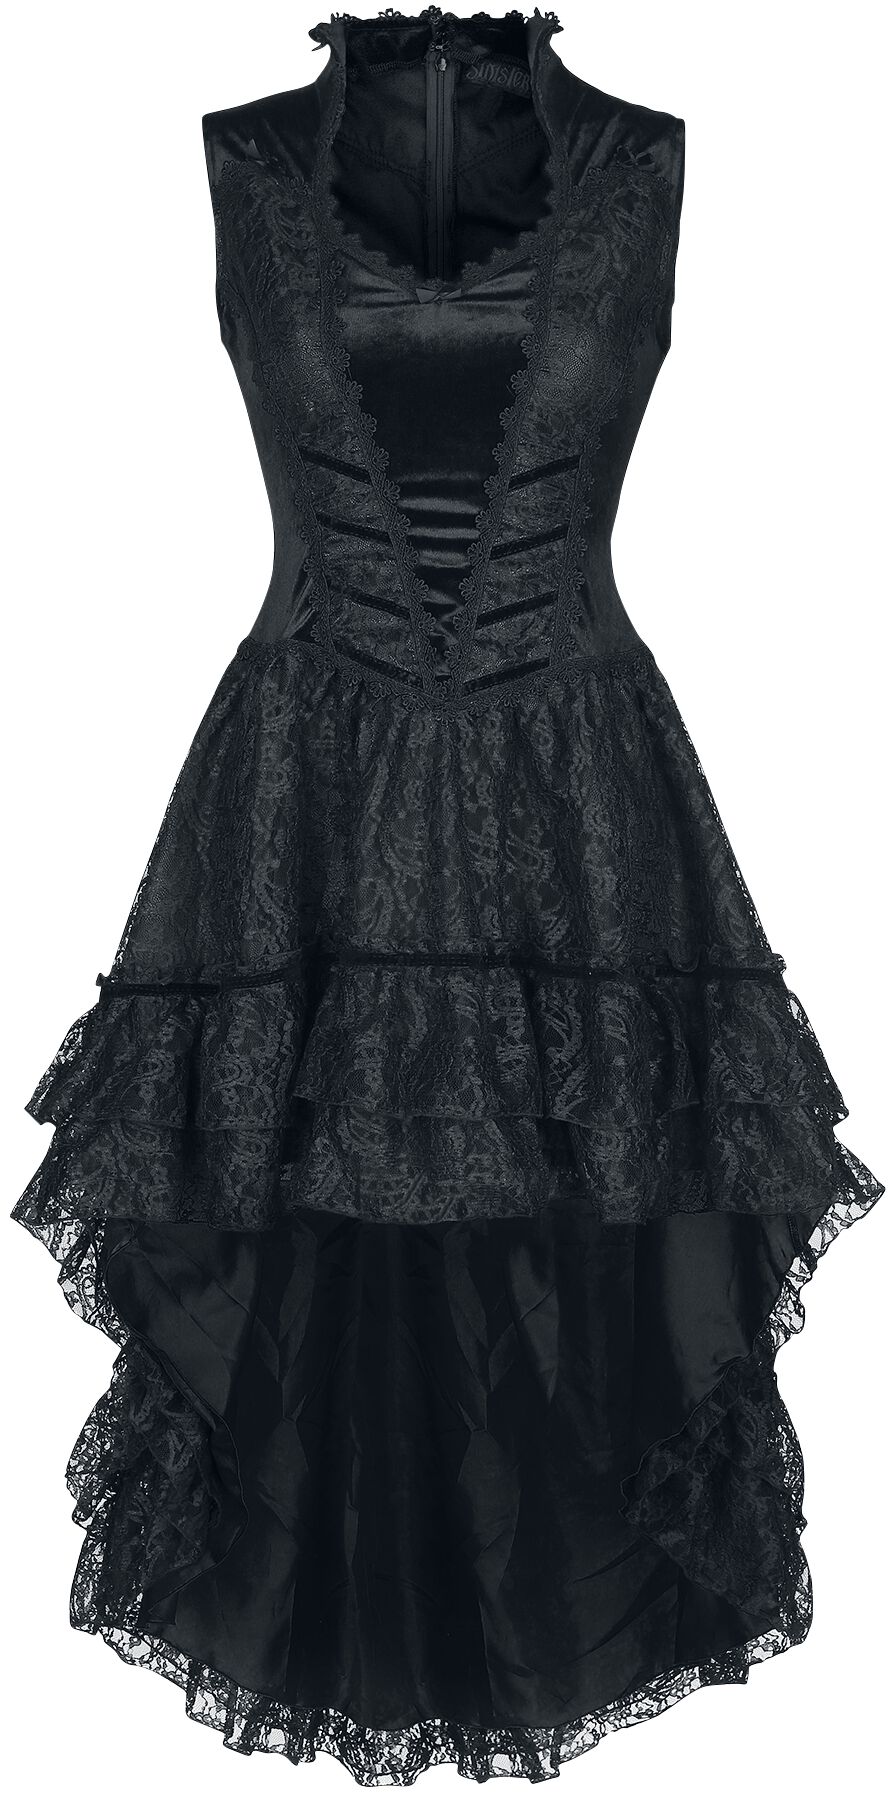 Sinister Gothic Gothic Dress Medium-length dress black